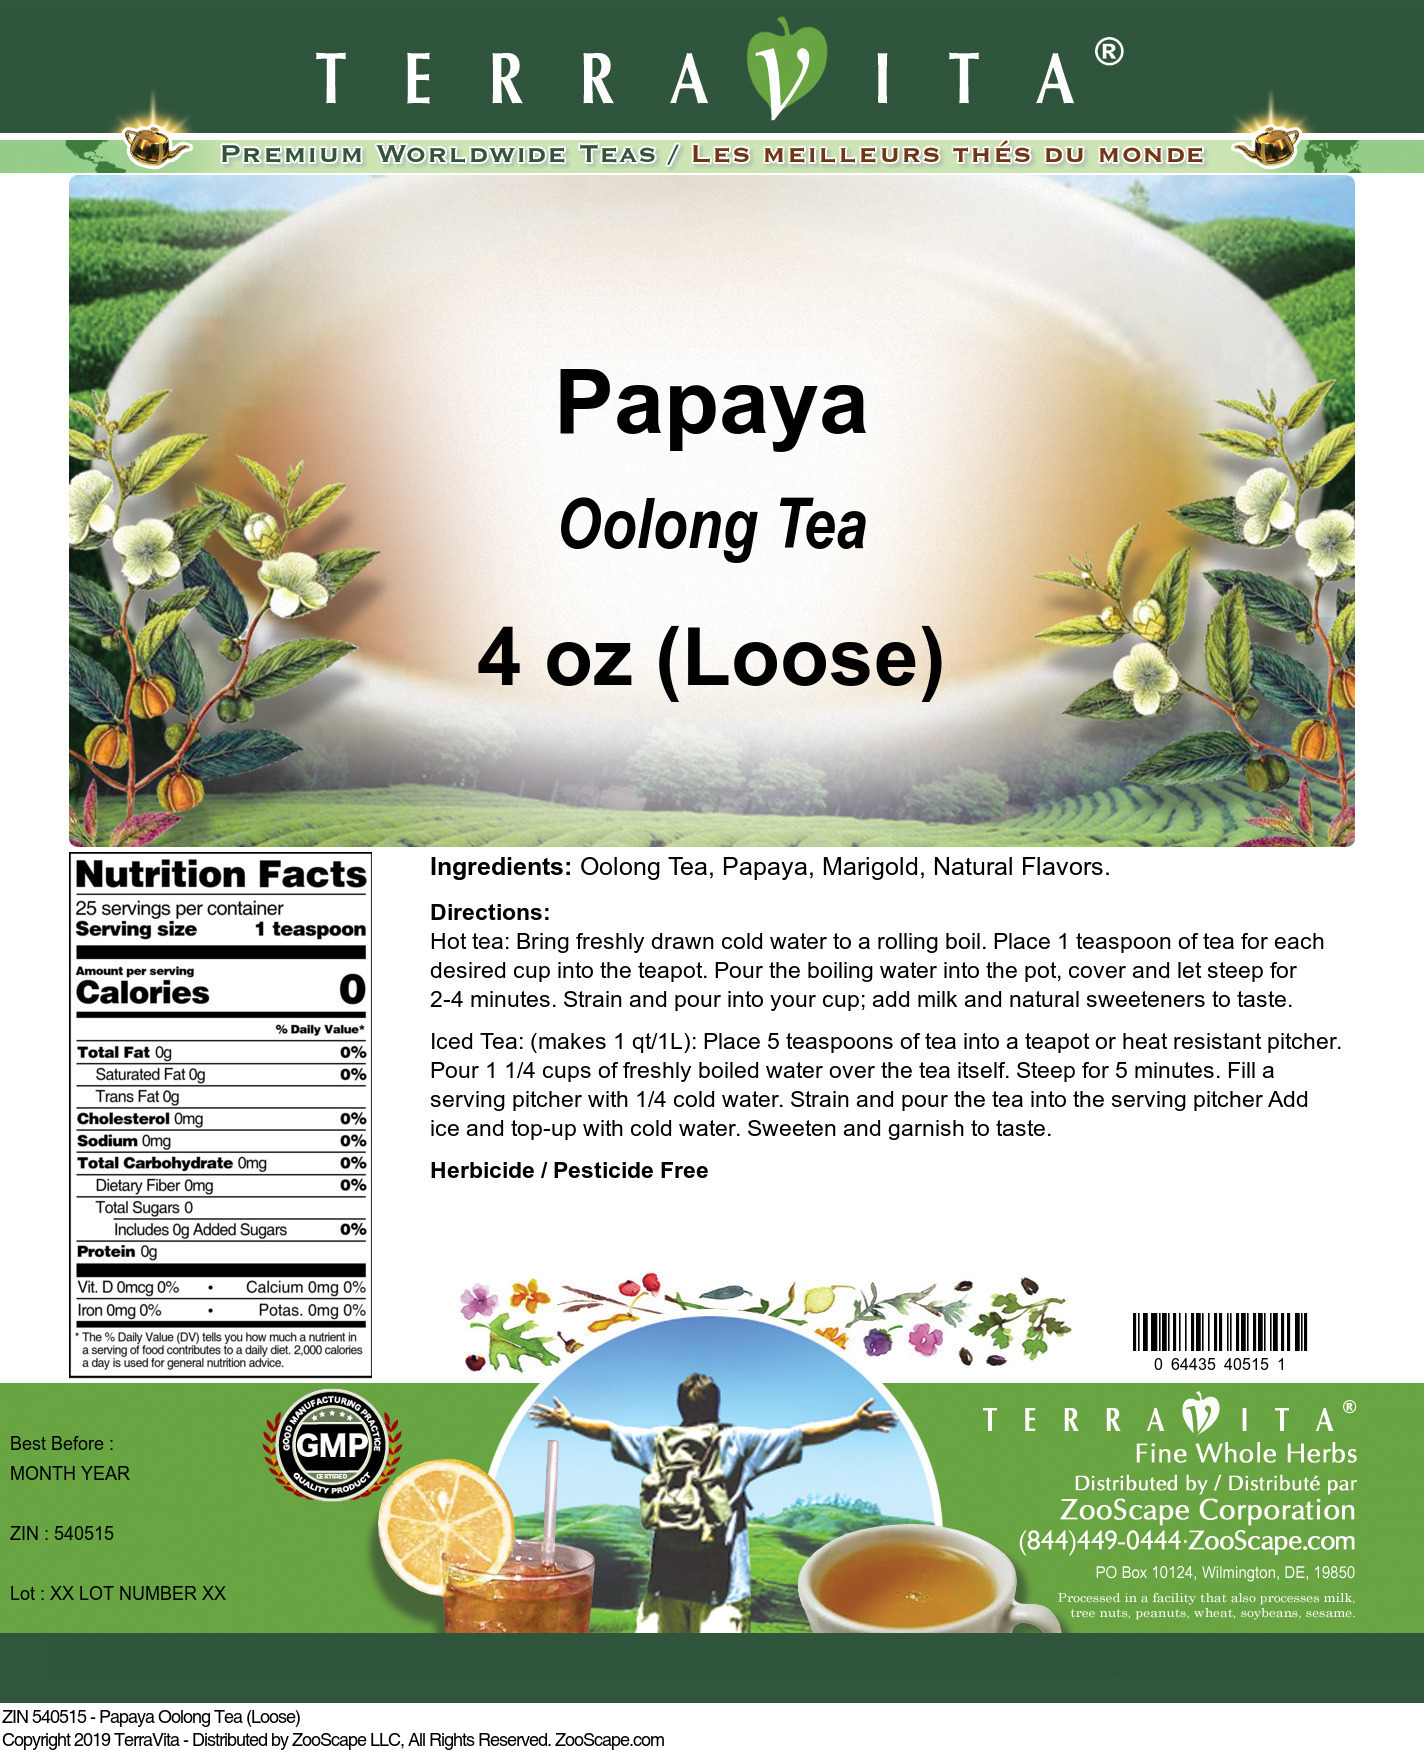 Papaya Oolong Tea (Loose) - Label